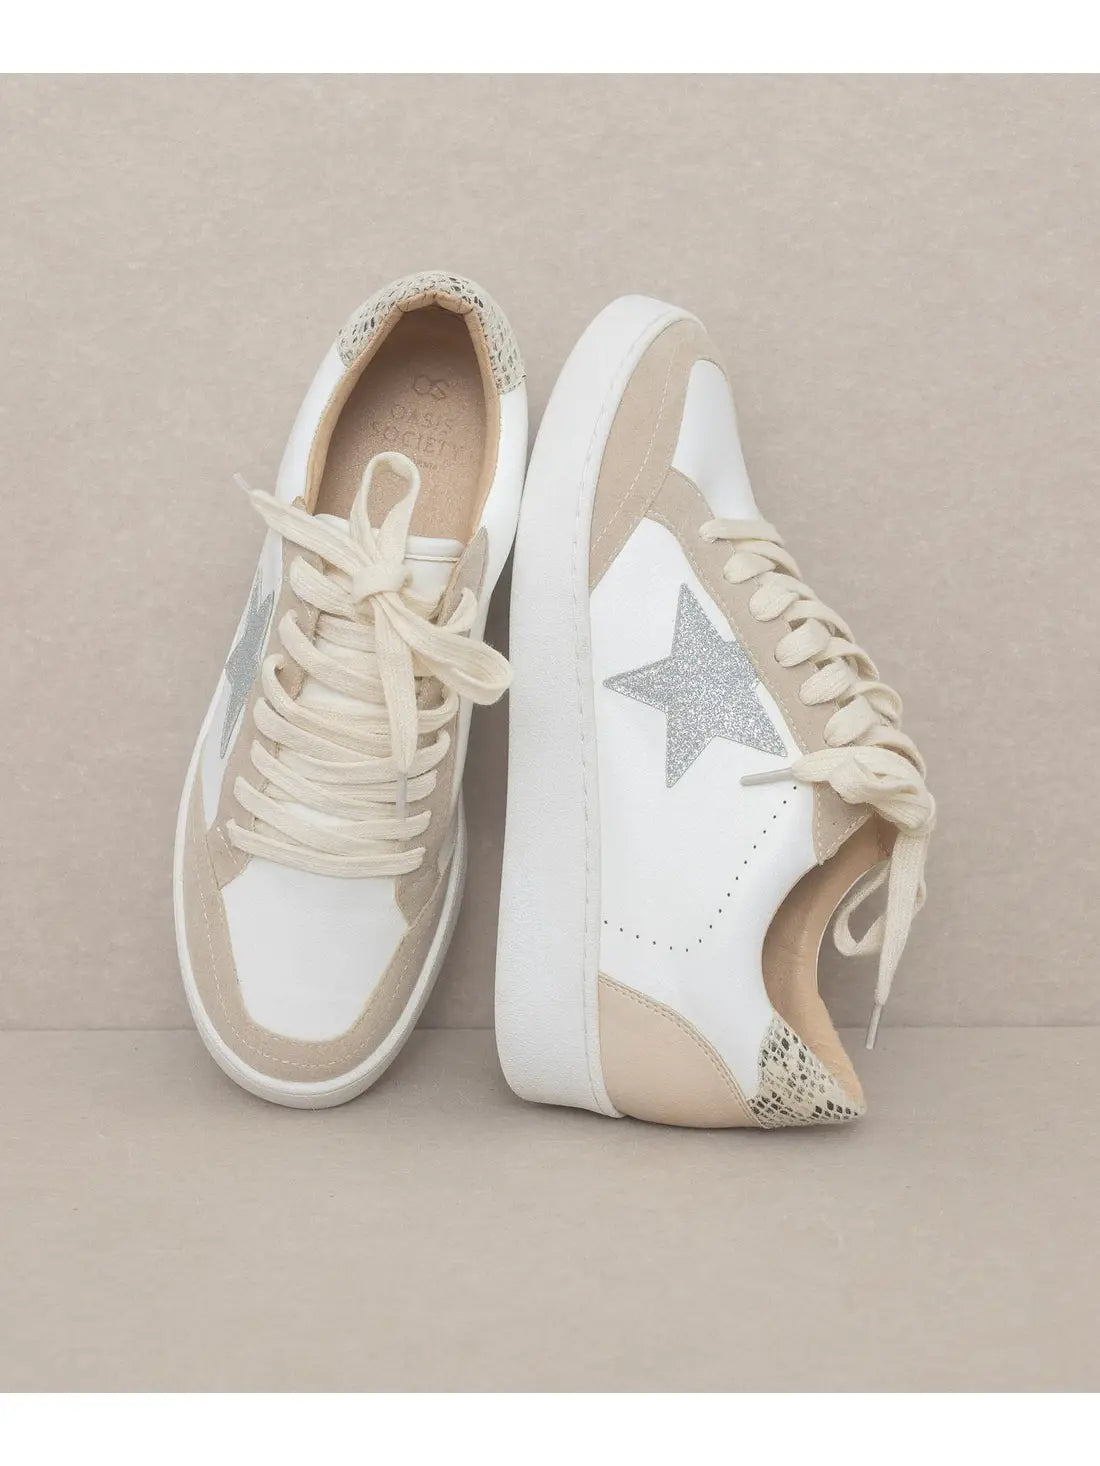 The Star Sneaker